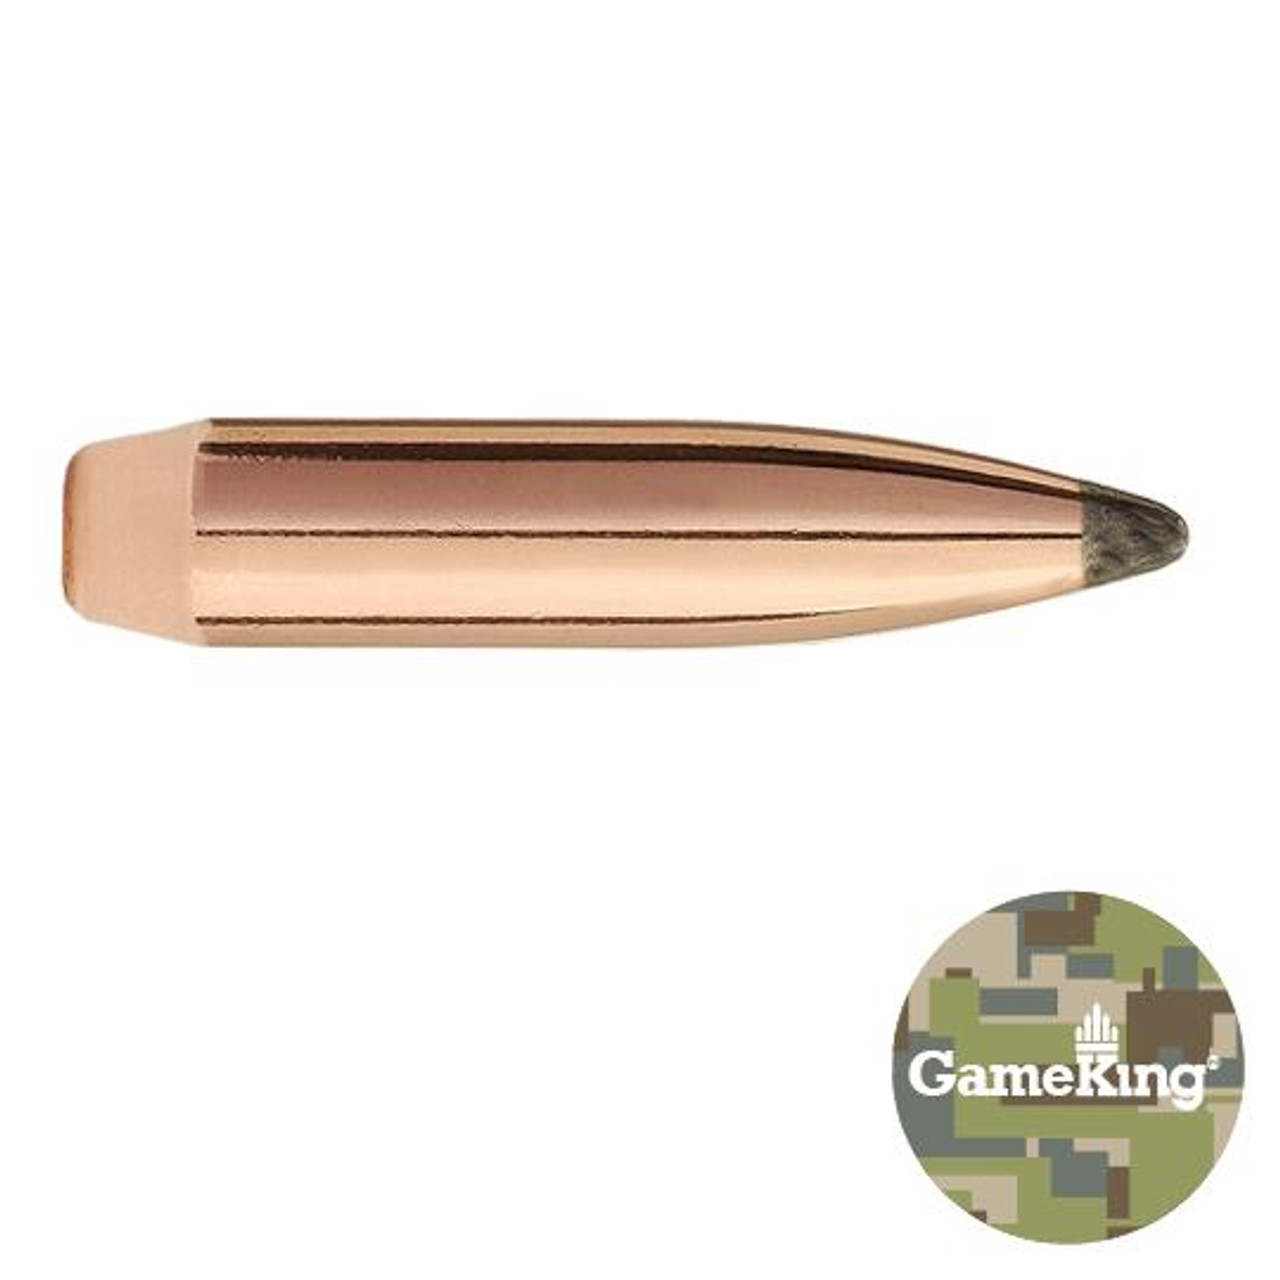 Sierra GameKing Bullets 264 Caliber, 6.5mm (264 Diameter) 140 Grain Spitzer Boat Tail Box of 100